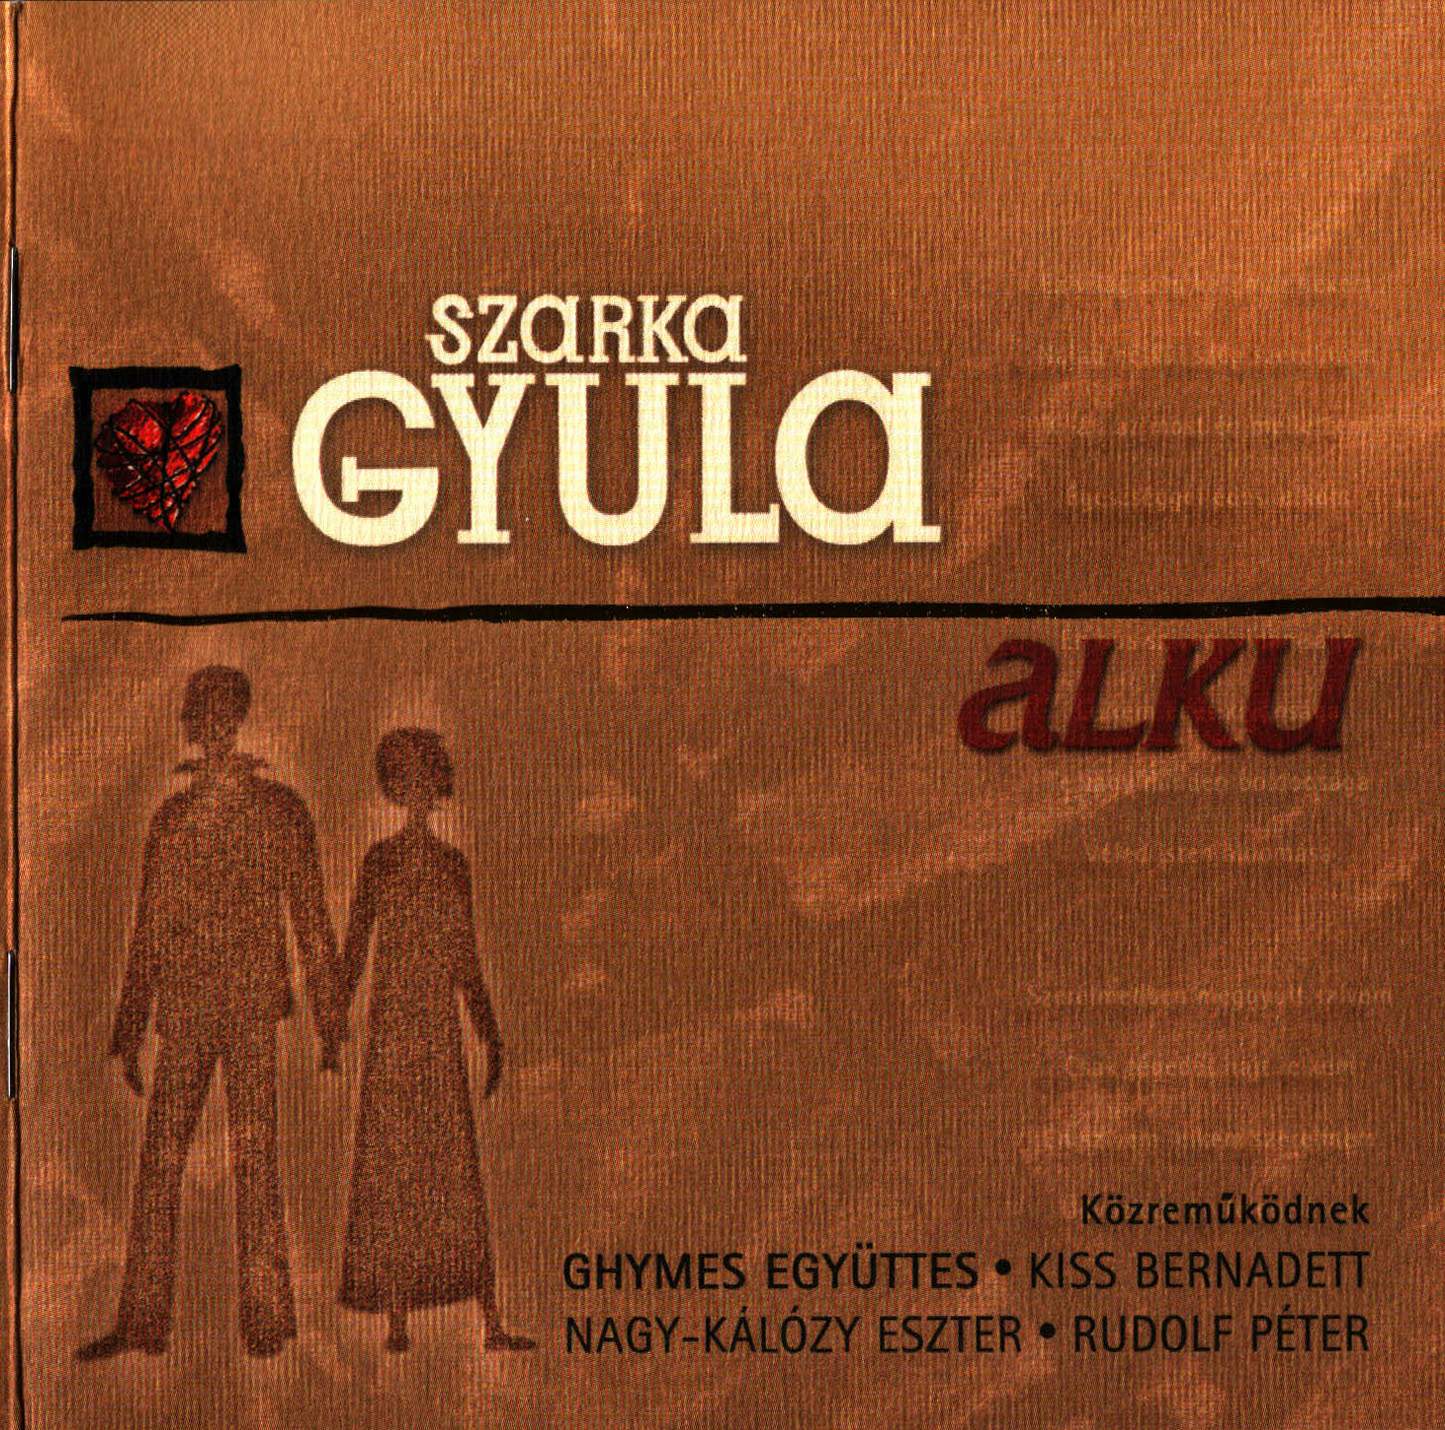 Szarka Gyula Alku